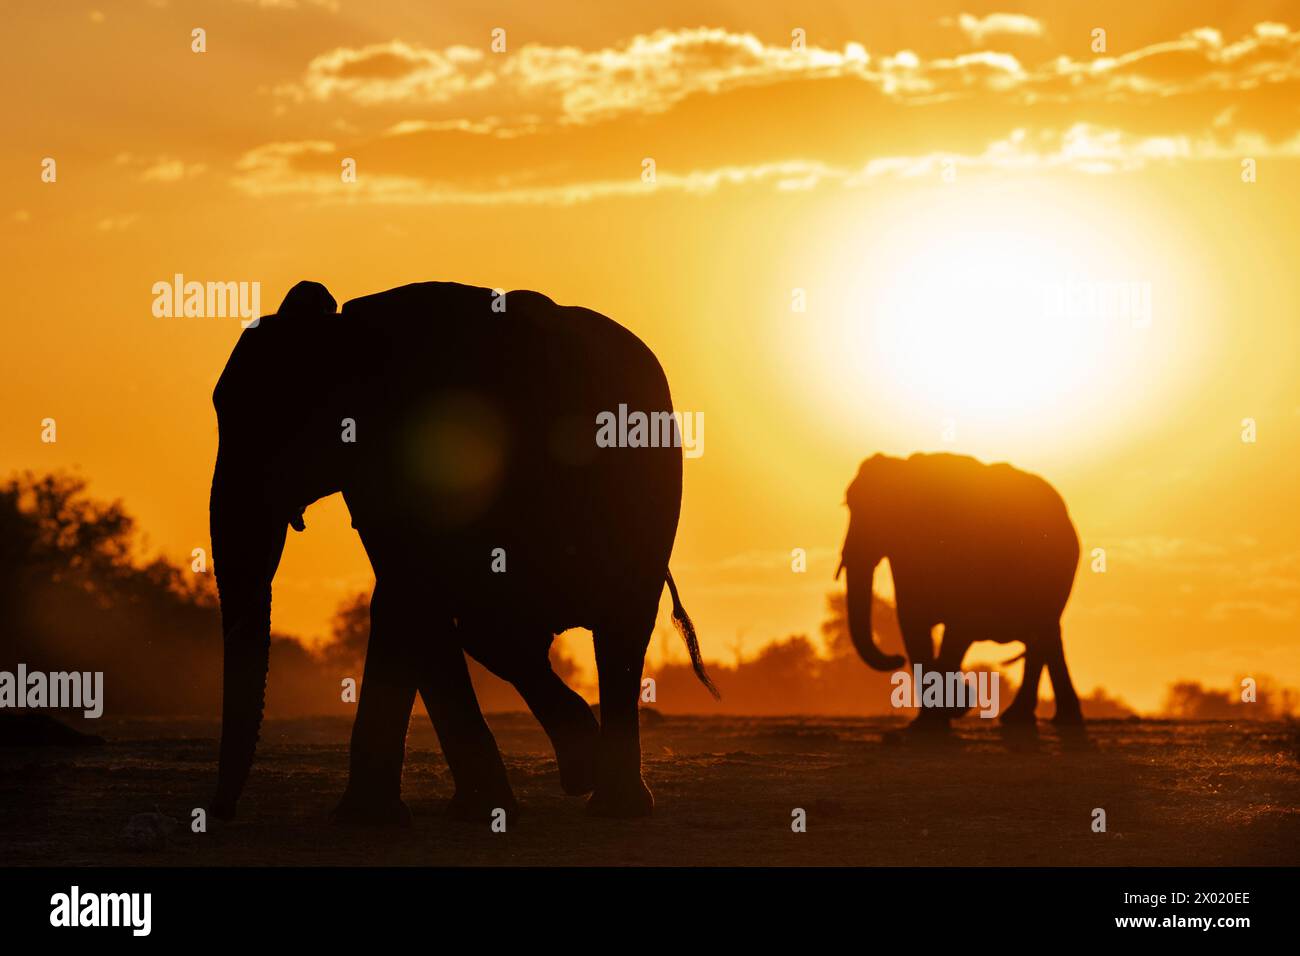 Elephants (Loxodonta africana) at sunset, Chobe national park, Botswana Stock Photo